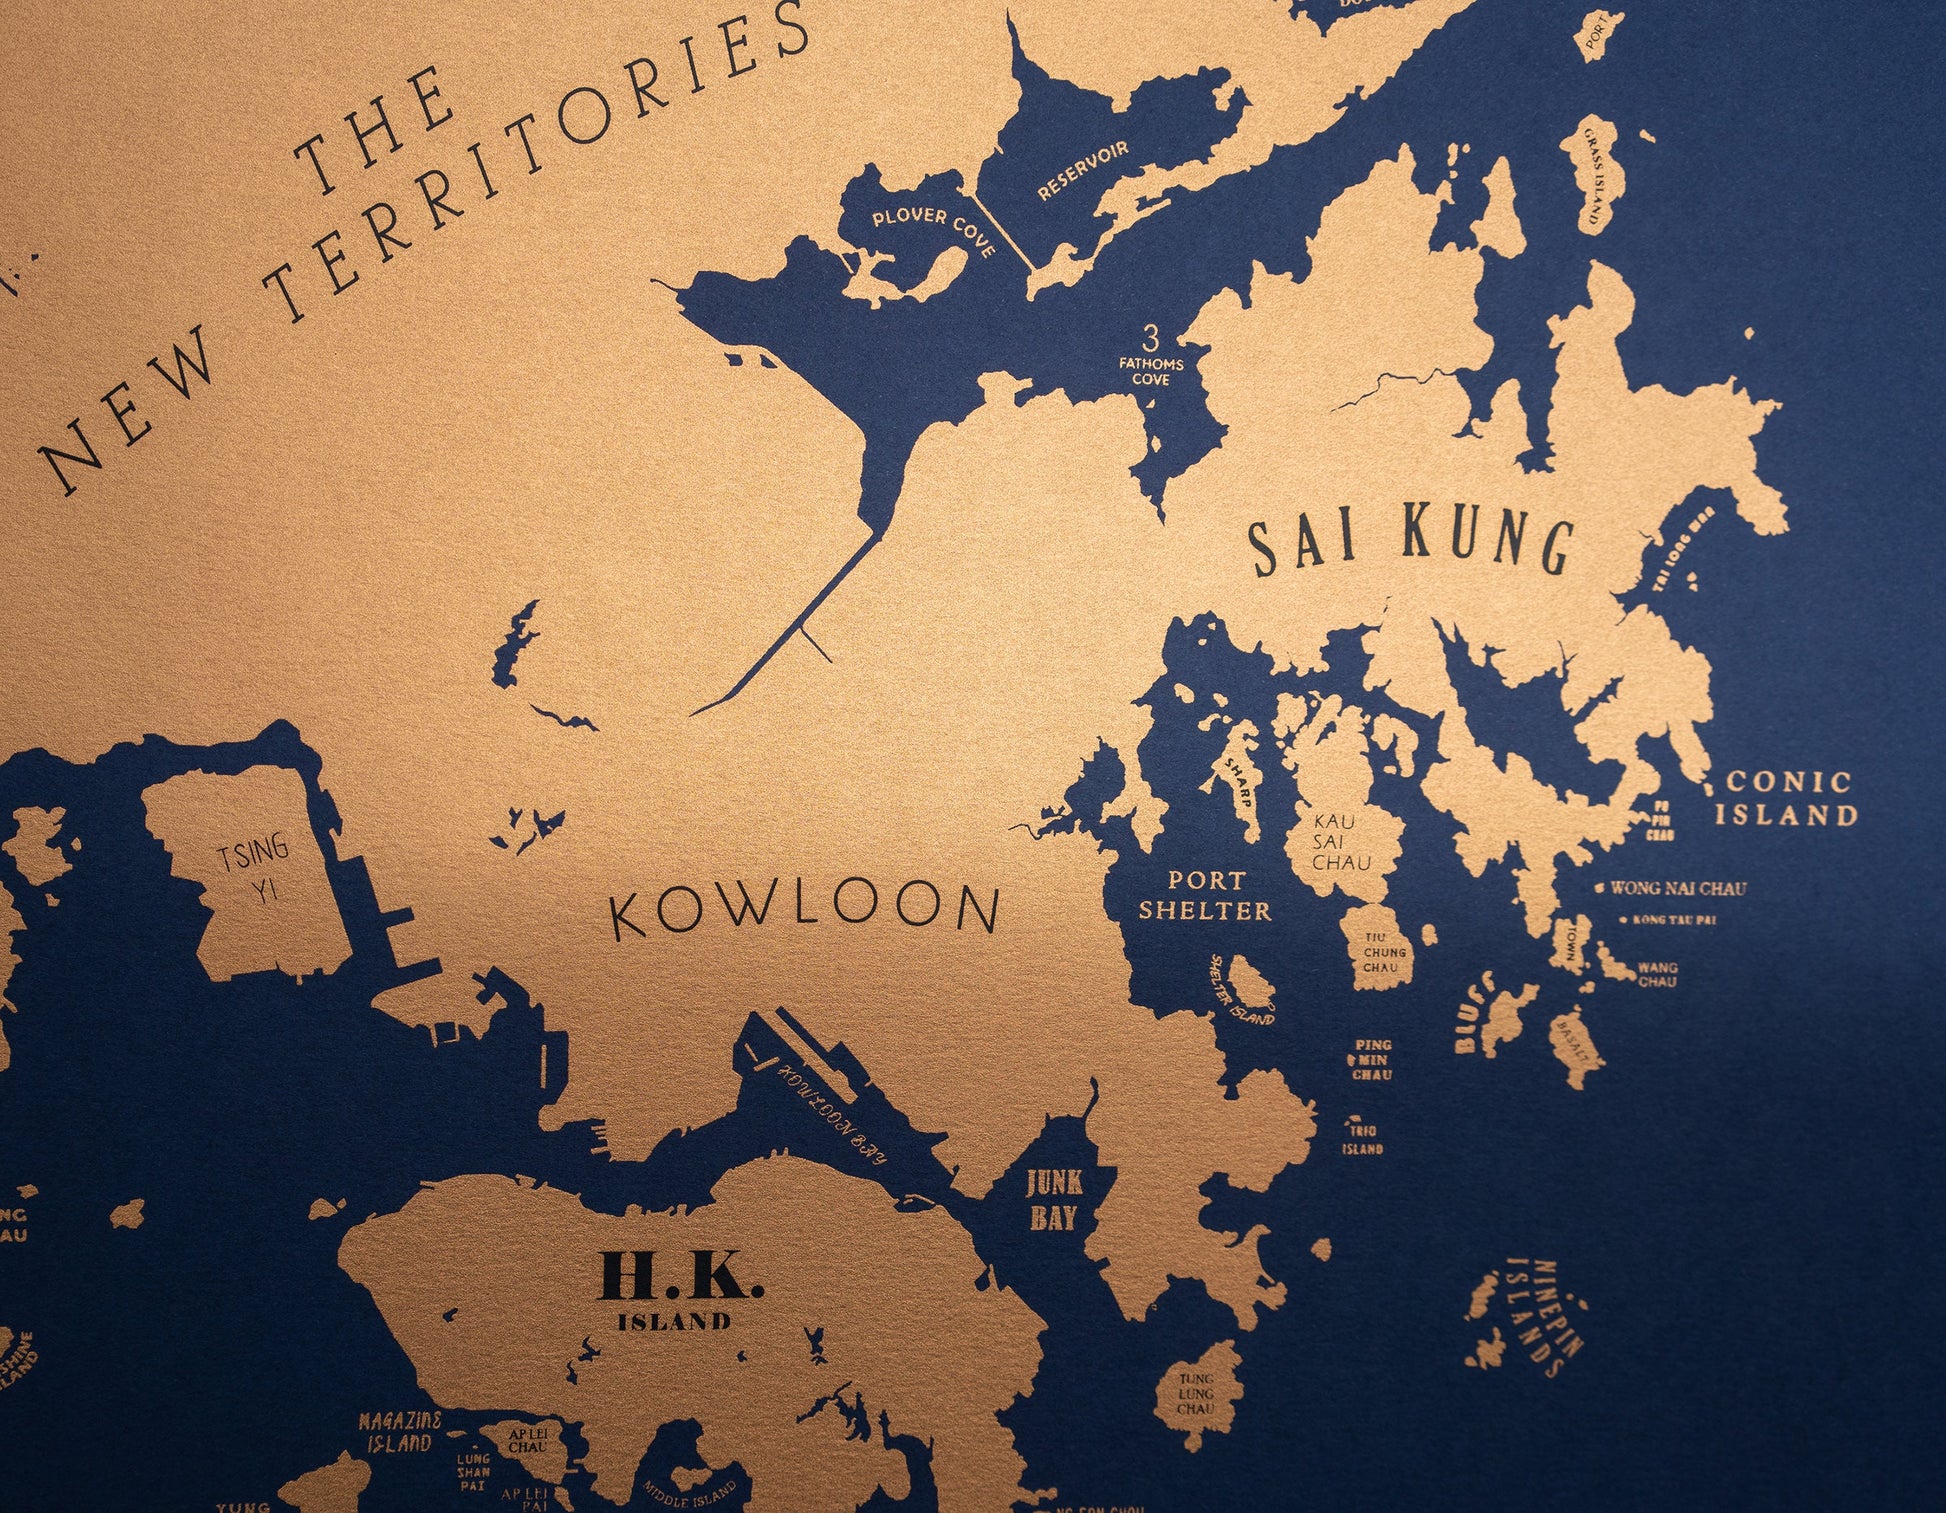 Hong Kong Limited Edition - tinyislandmaps